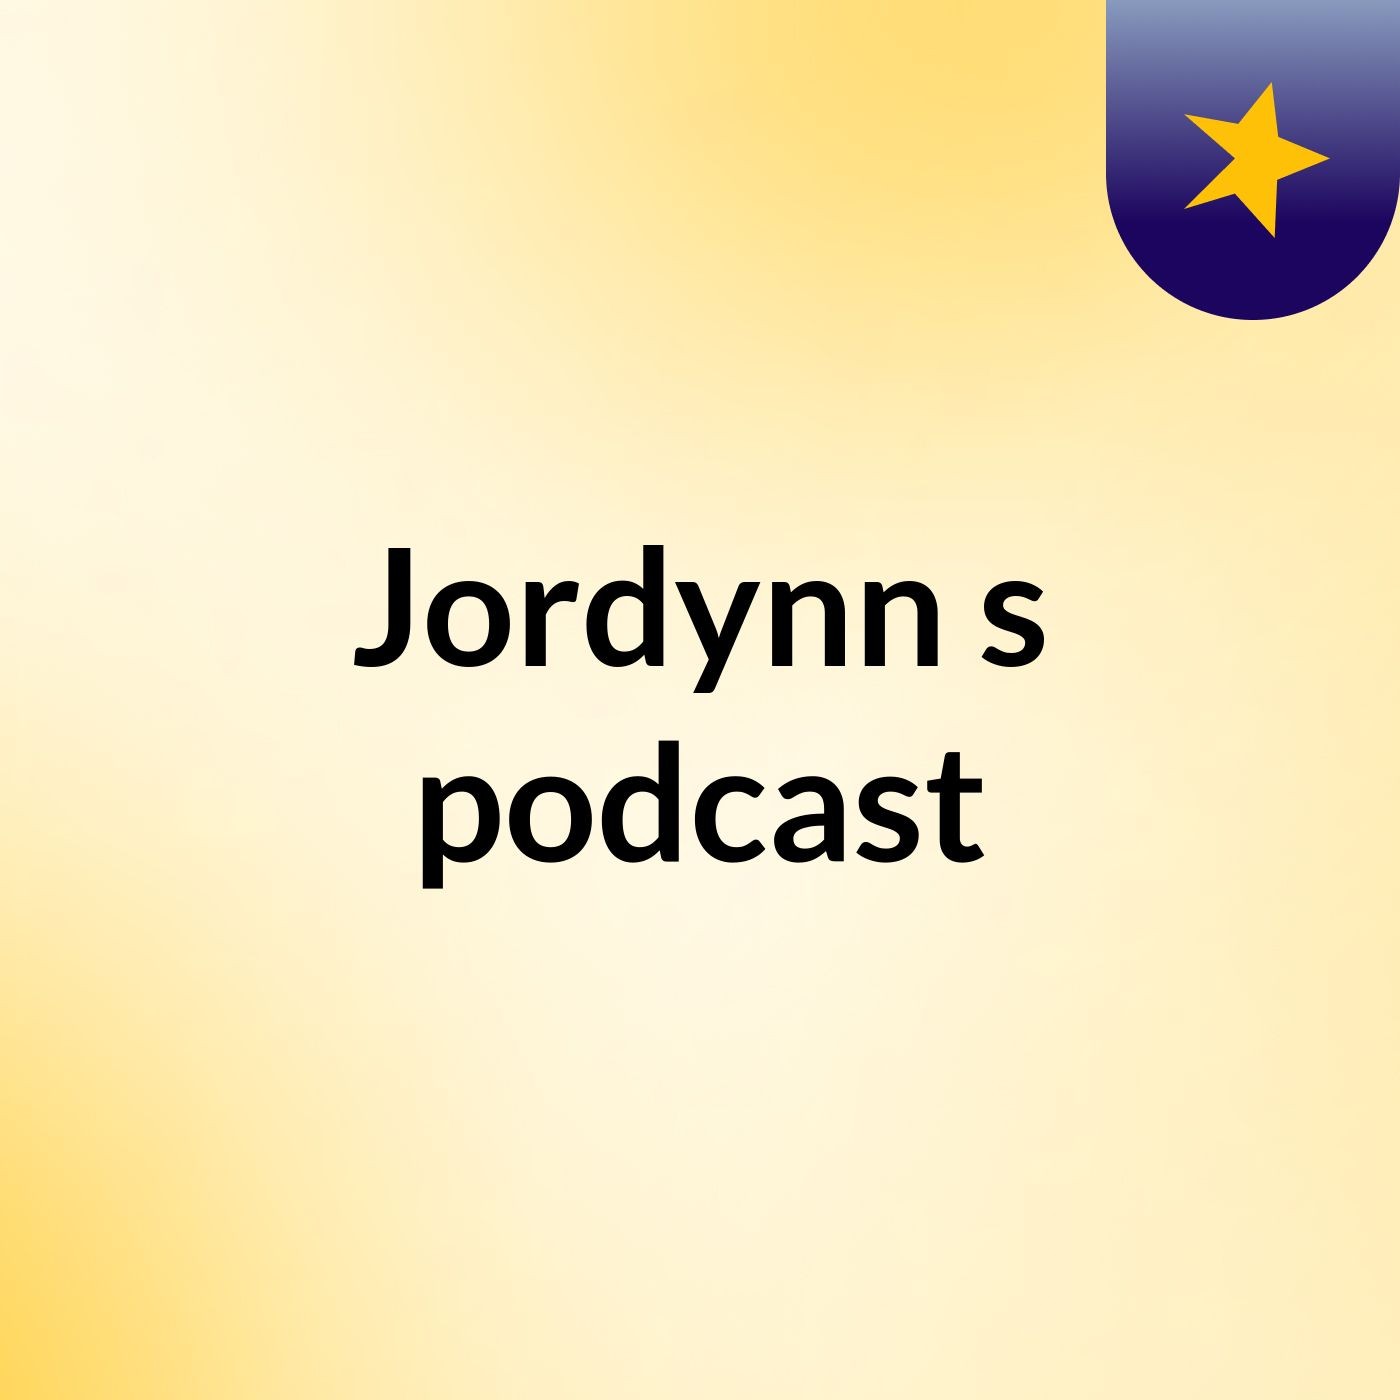 Jordynn's podcast